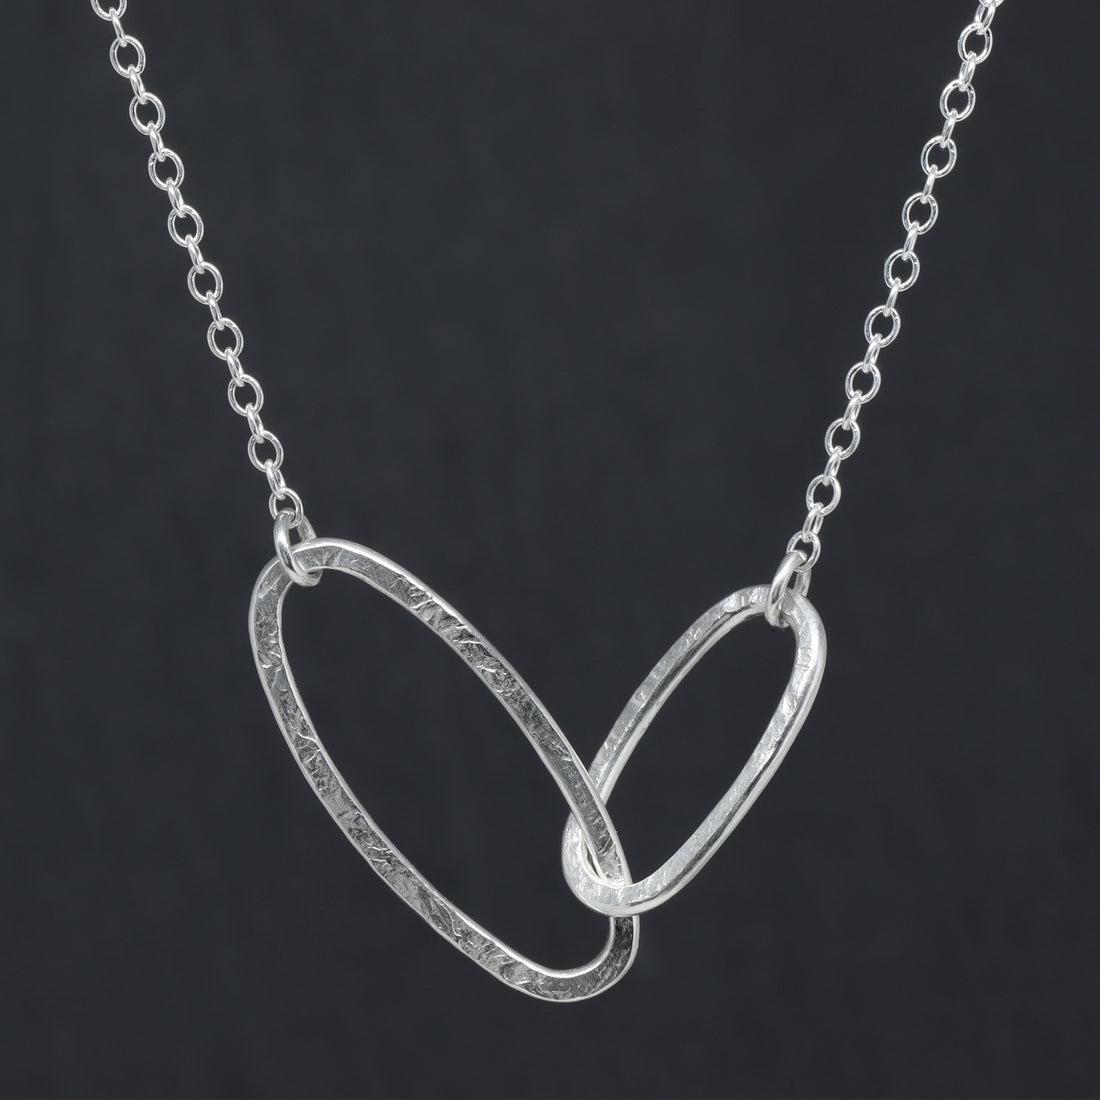 Aperture Link Necklace - Bright Sterling